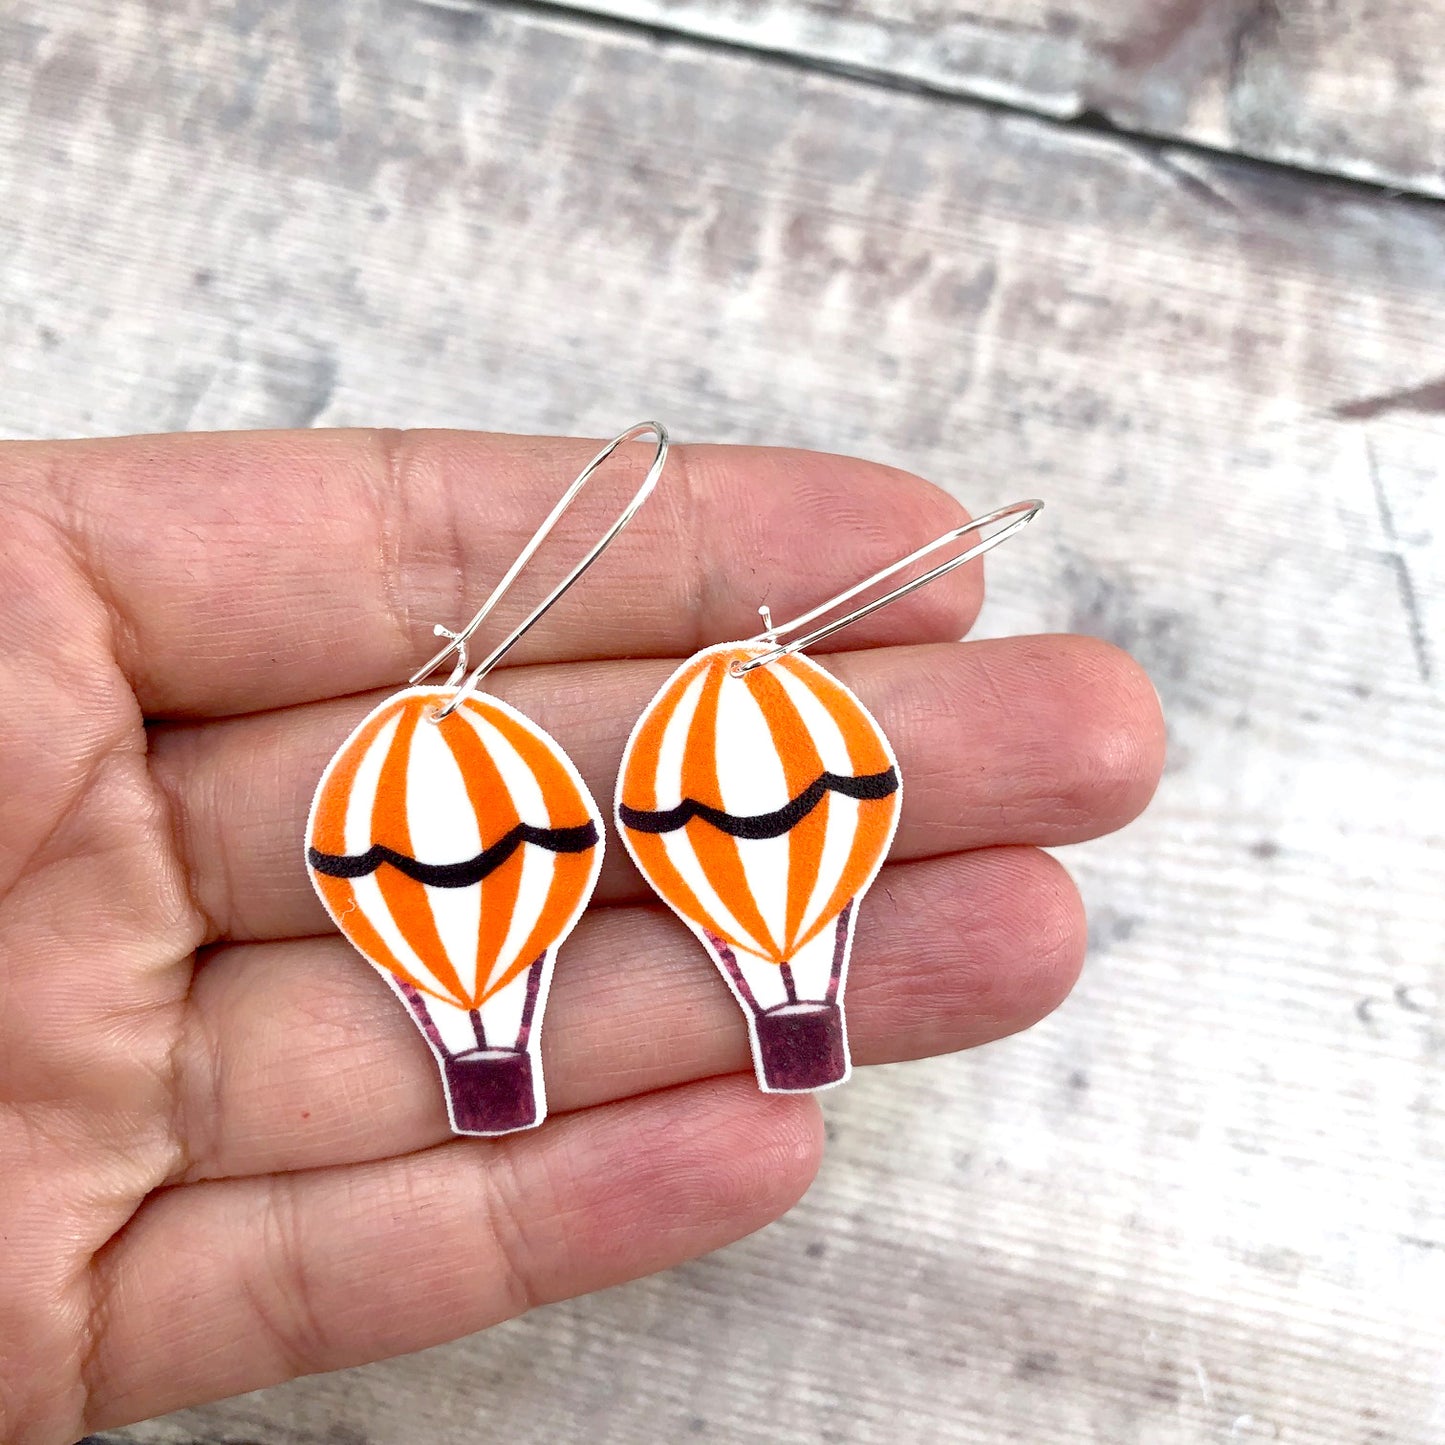 Orange quirky hot air balloon drop earrings